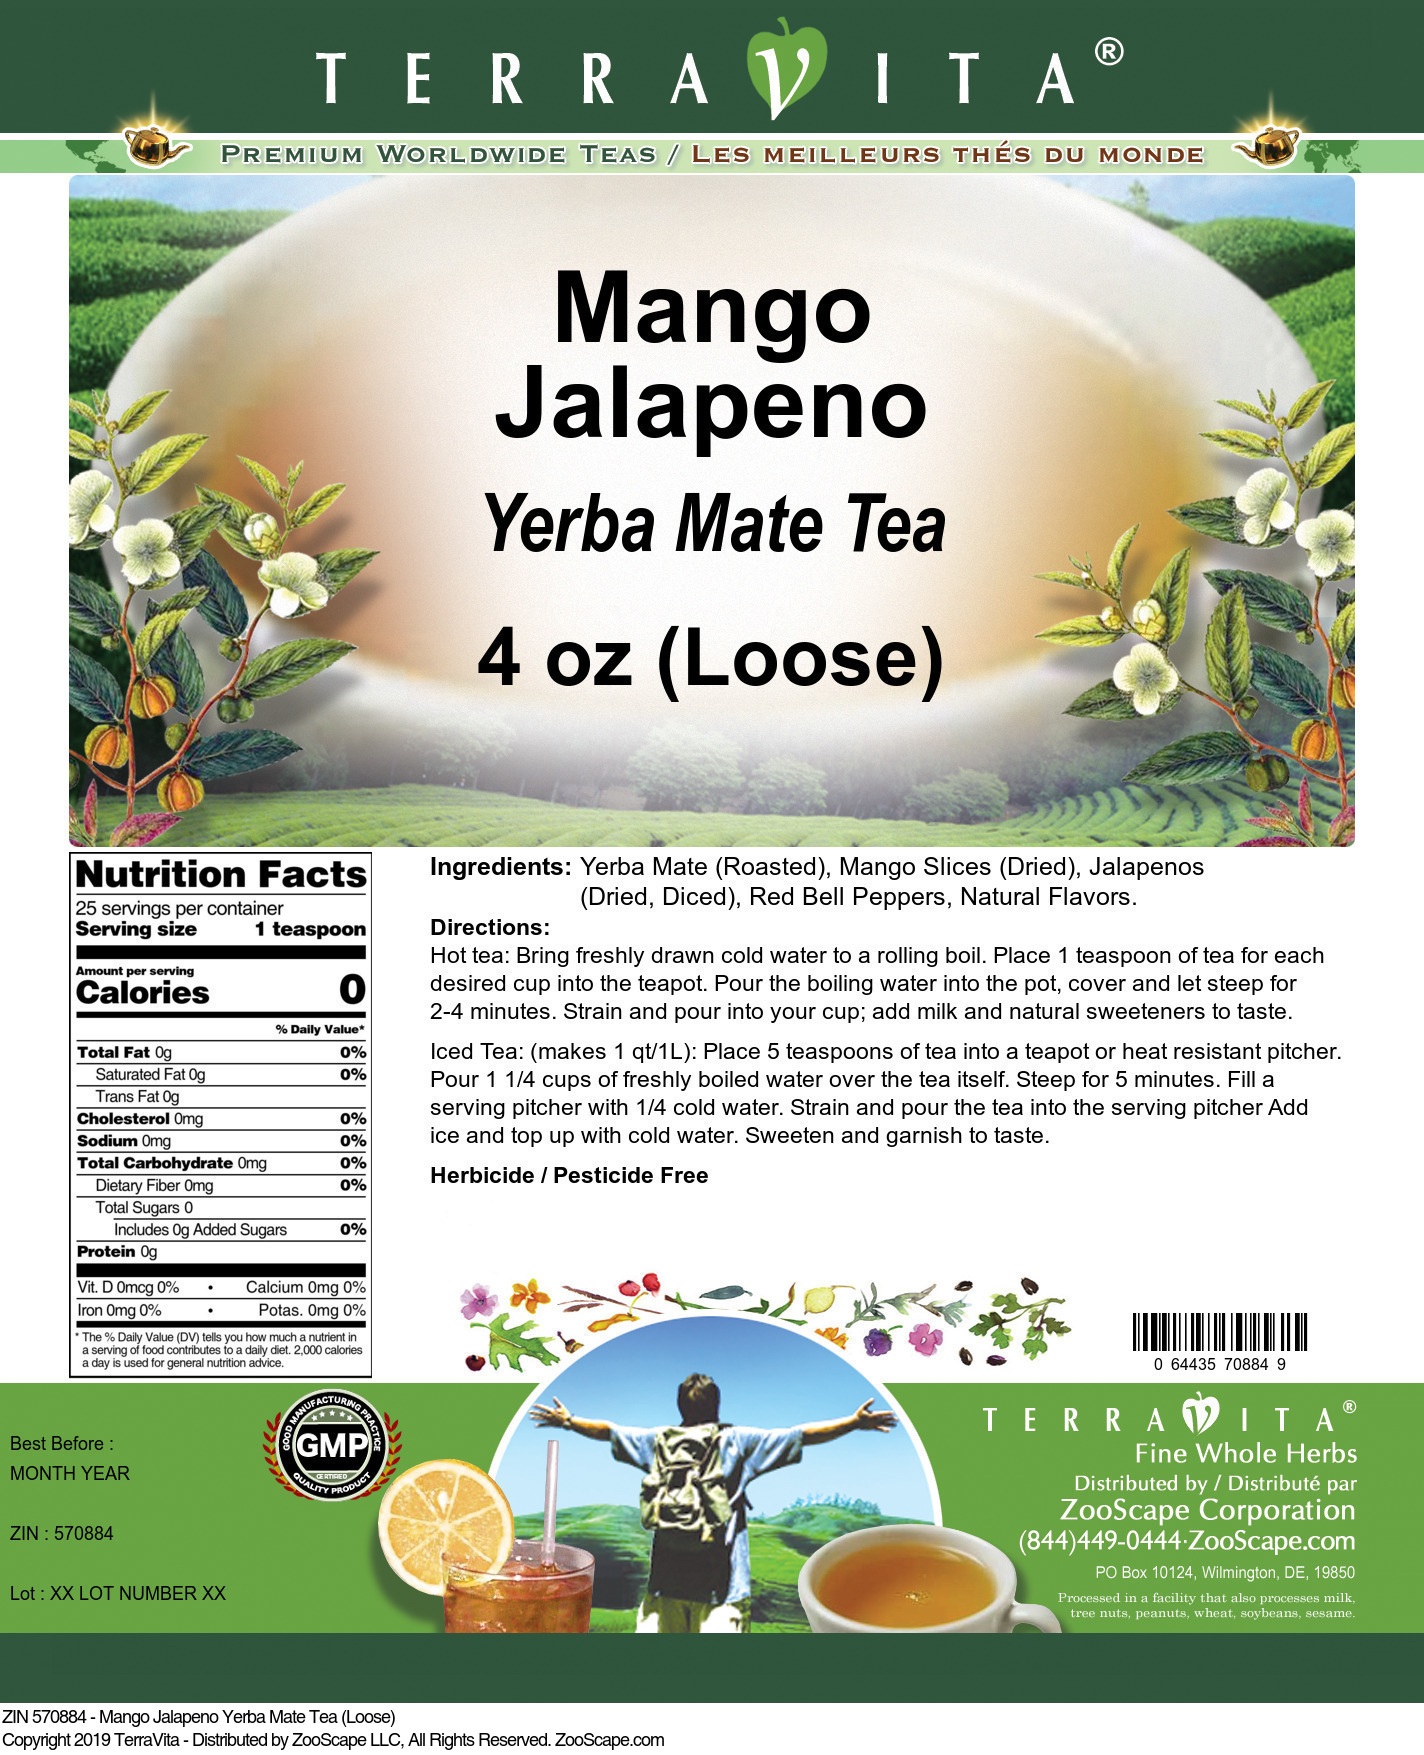 Mango Jalapeno Yerba Mate Tea (Loose) - Label